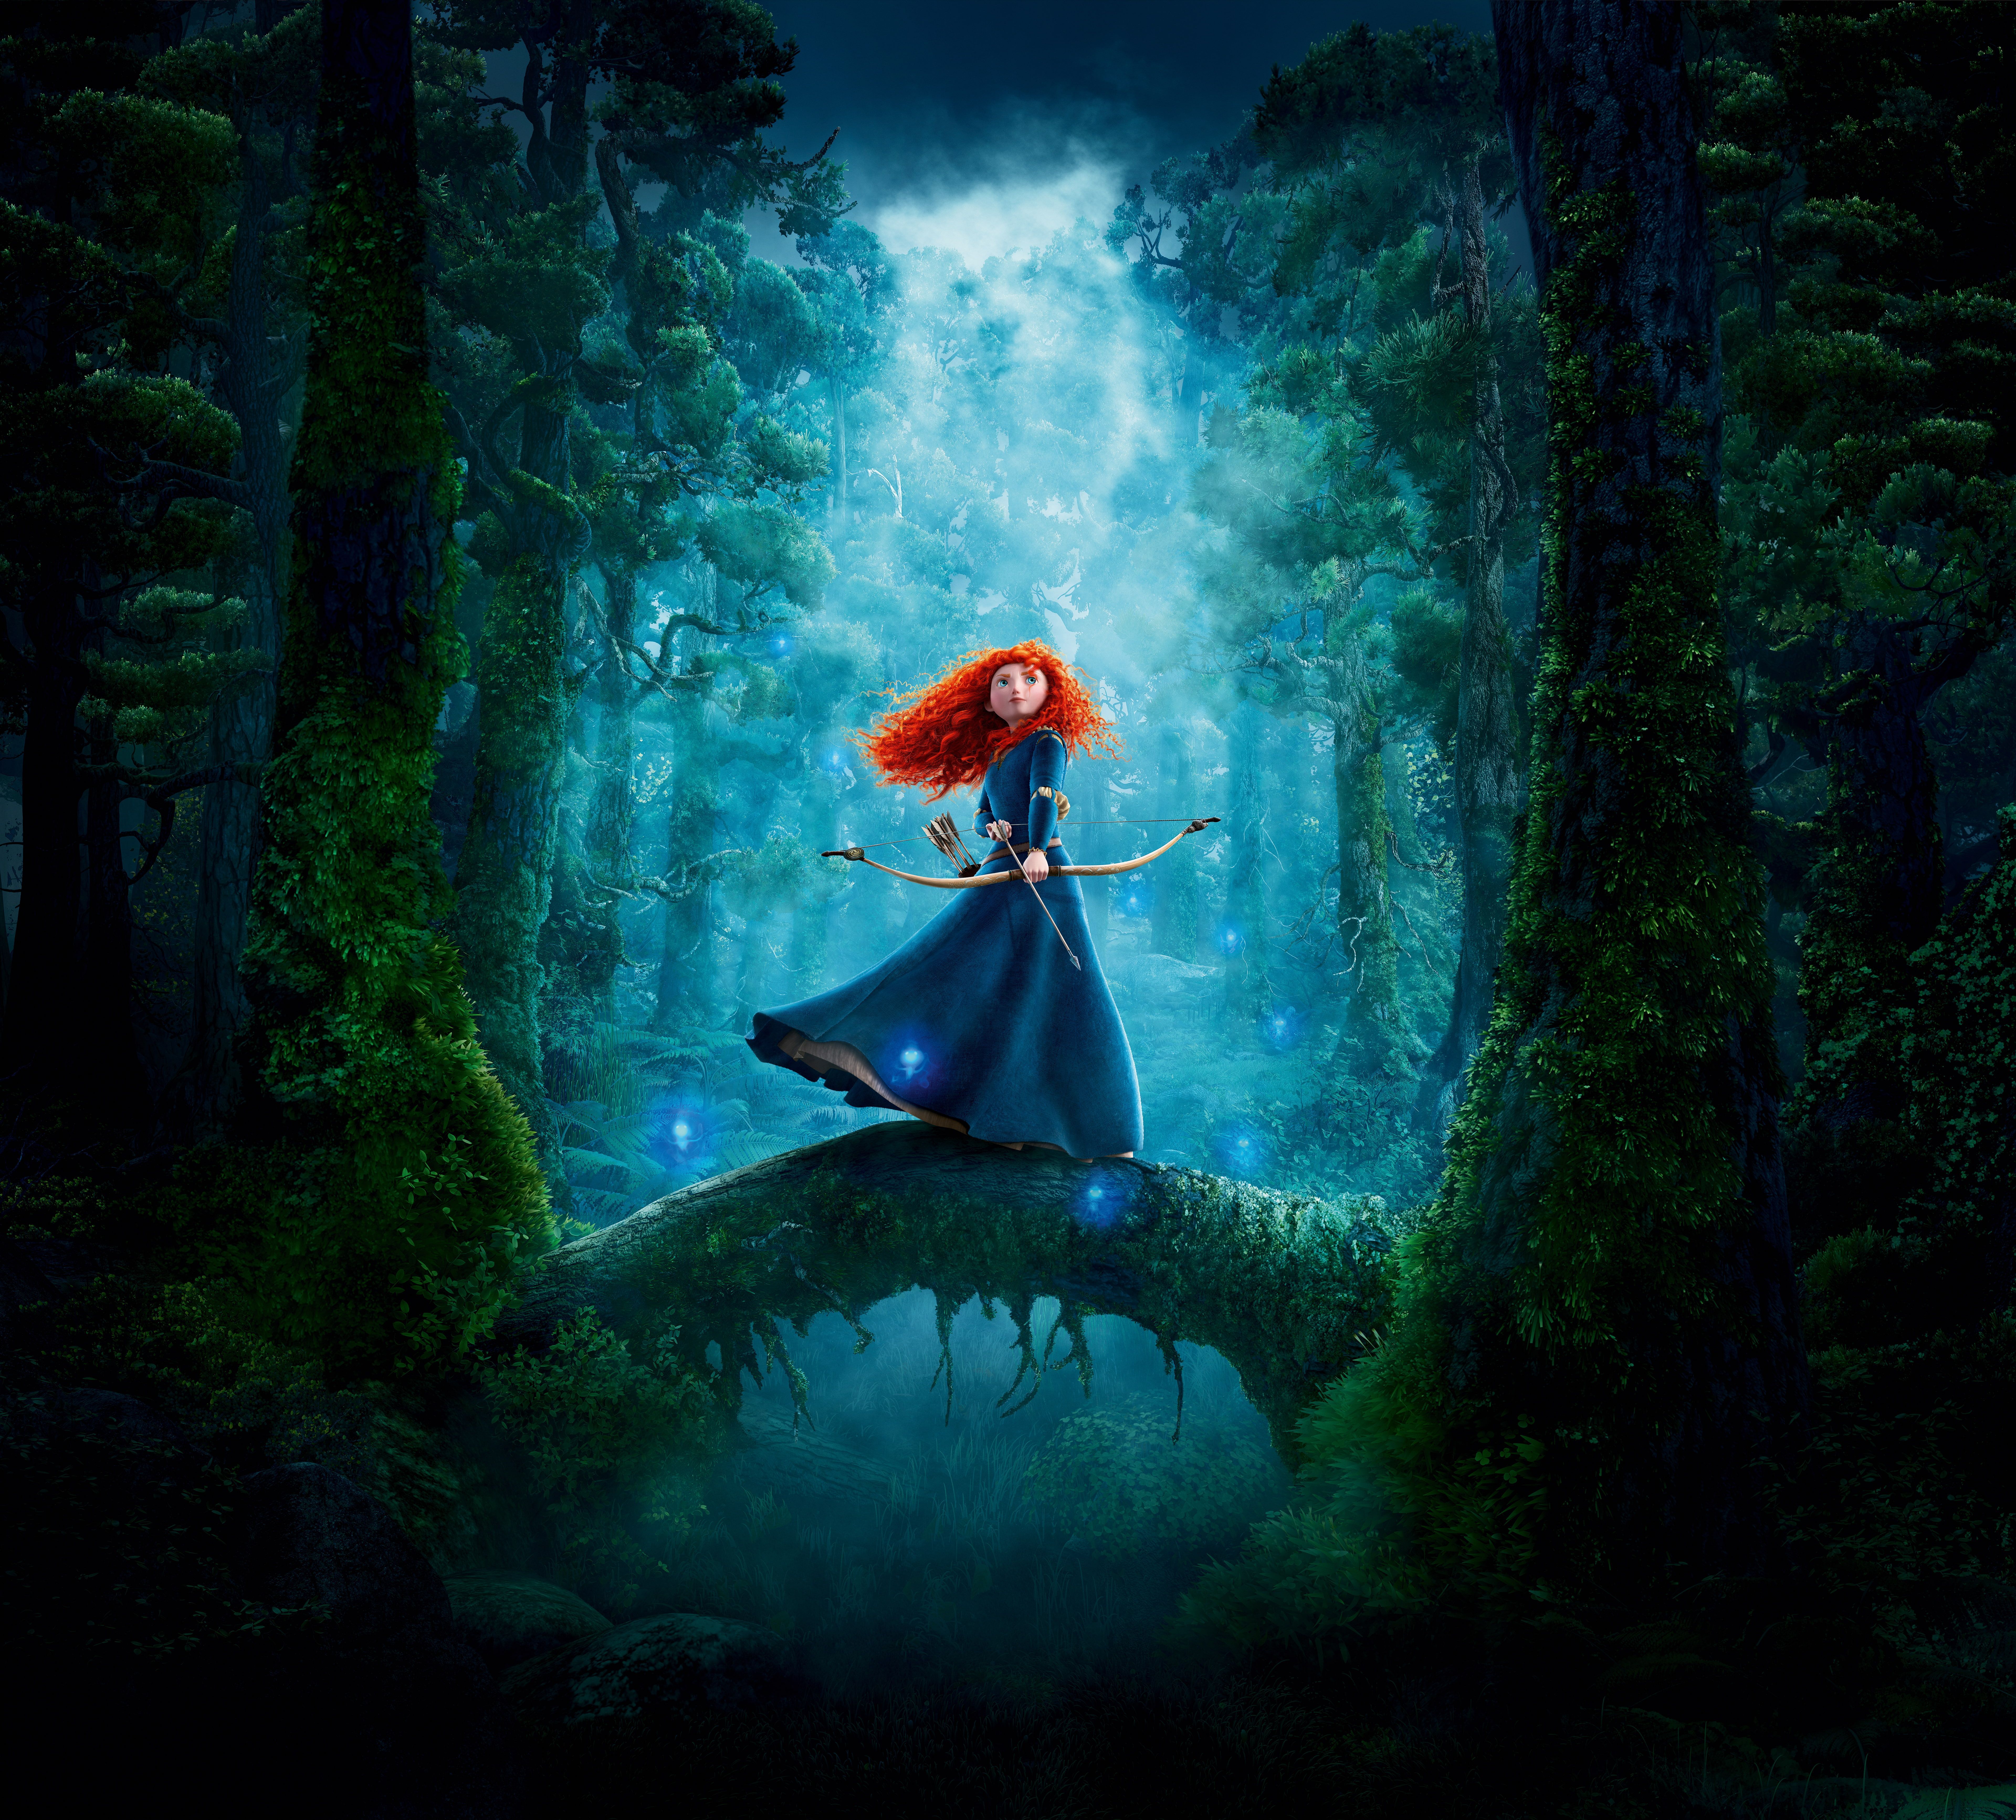 Princess Merida K #Pixar #Animation #Brave K K #wallpaper #hdwallpaper #desktop. Brave wallpaper, 8k wallpaper, Merida